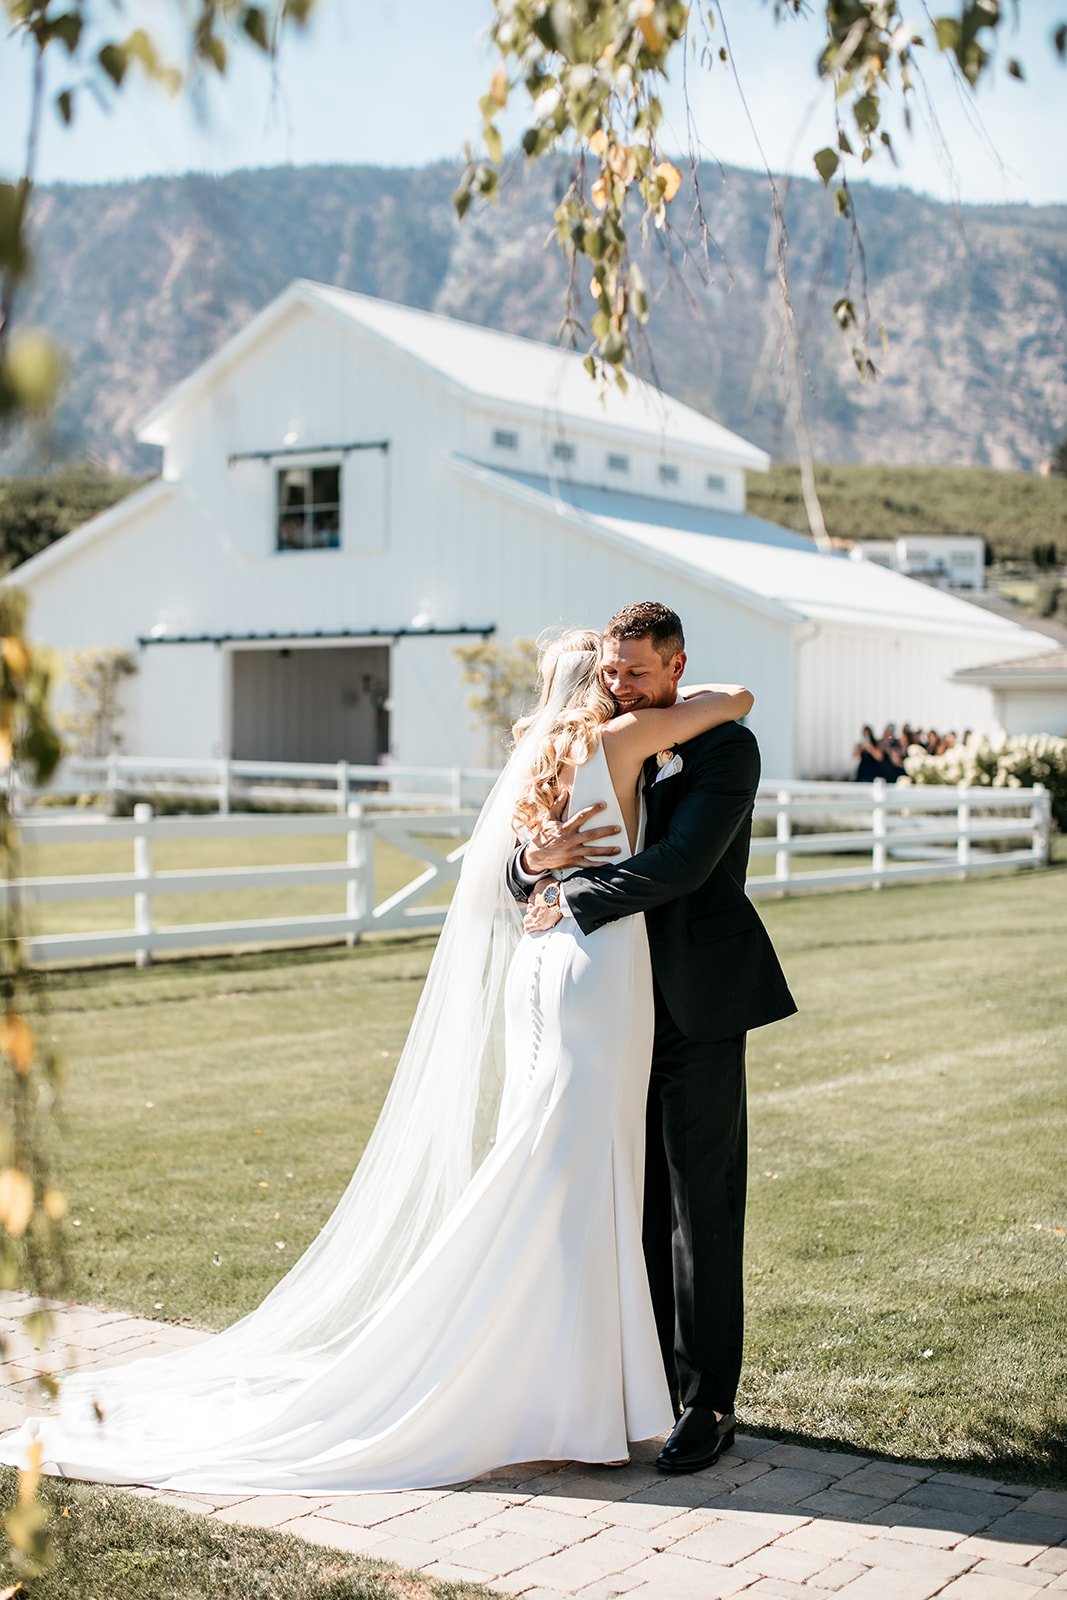  A bride wearing Alyssa Kristin Maven wedding dress embracing the groom on their wedding day at Harmony Meadows barn wedding venue near Seattle, Washington. 